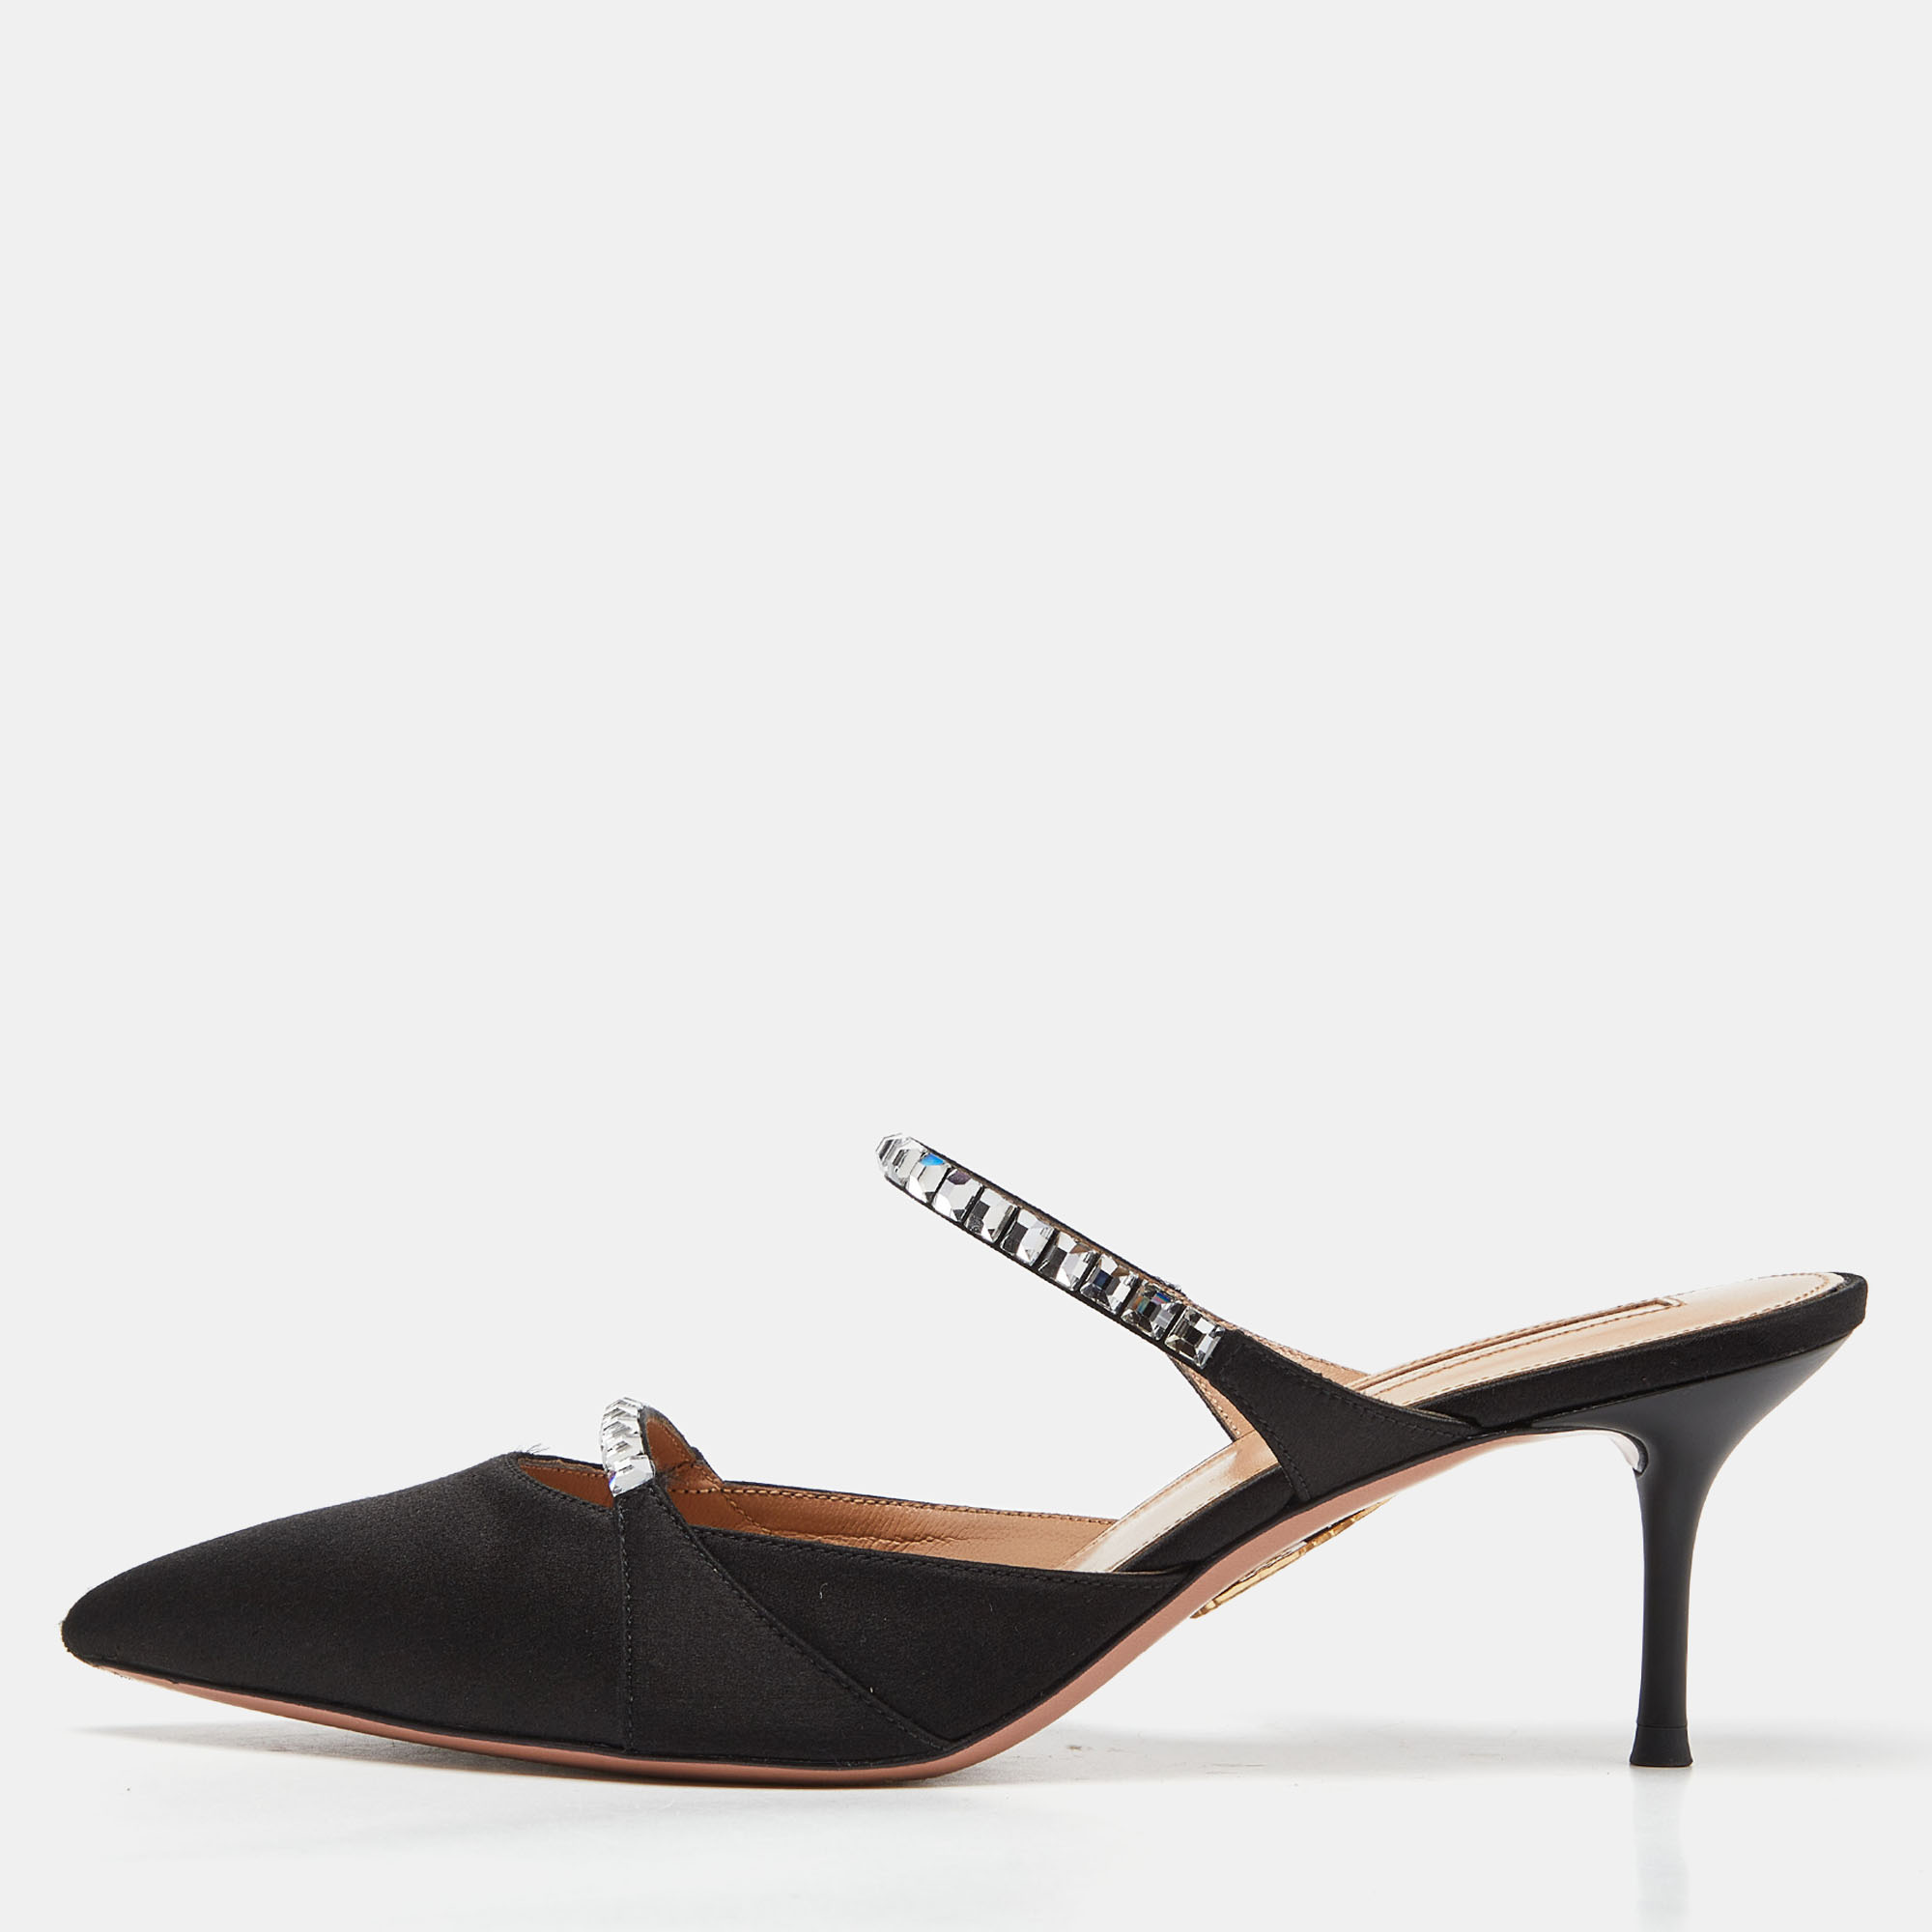 Pre-owned Aquazzura Black Satin Crystal Embellished Mule Sandals Size 36.5